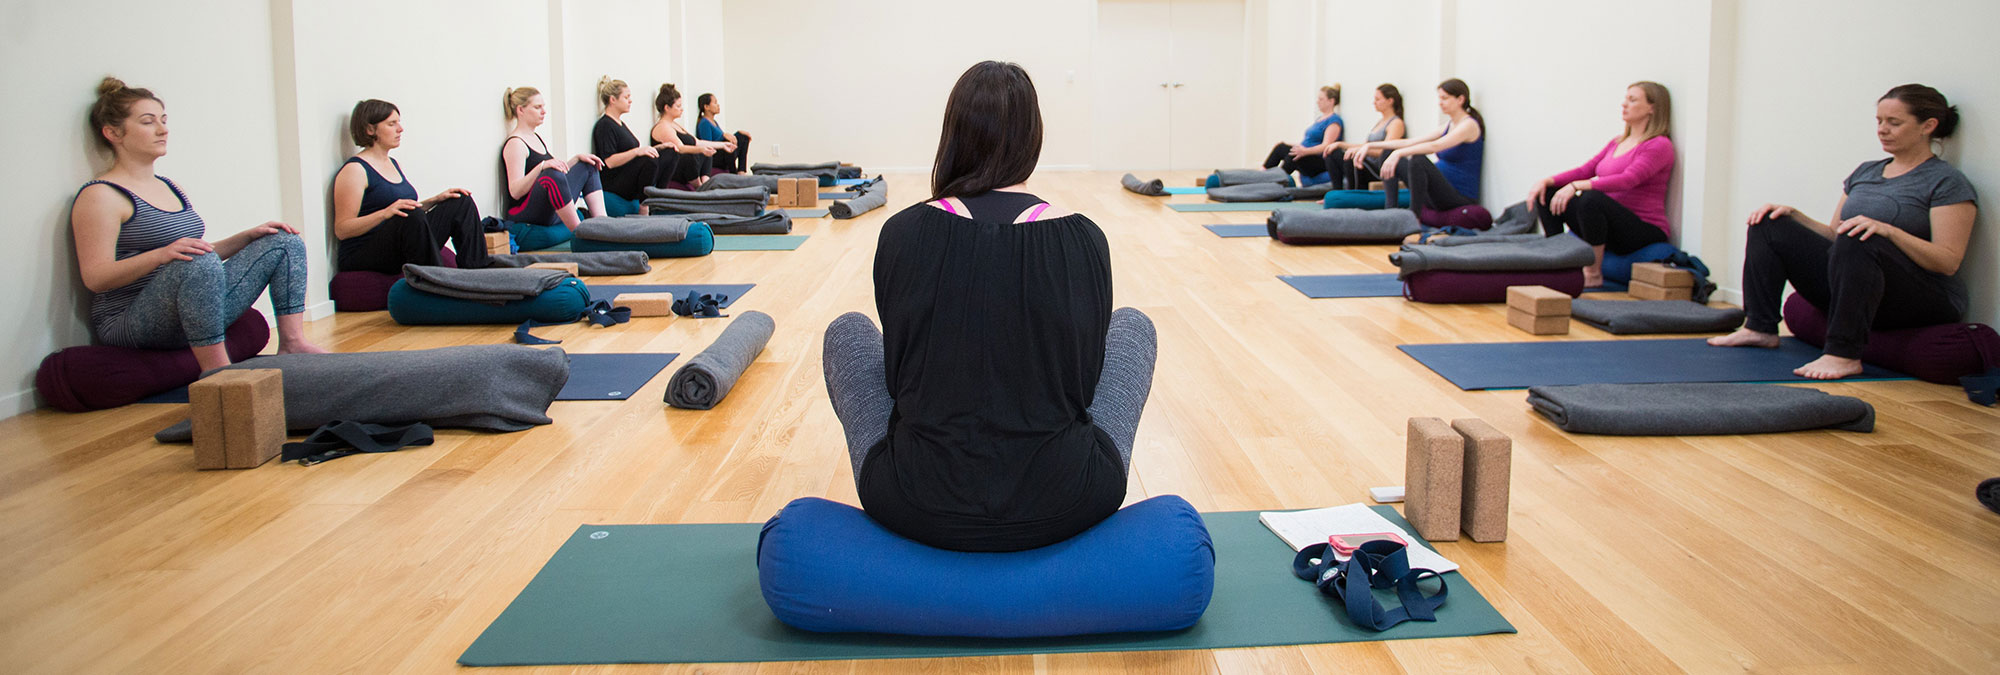 Yoga teacher with prenatal yoga class